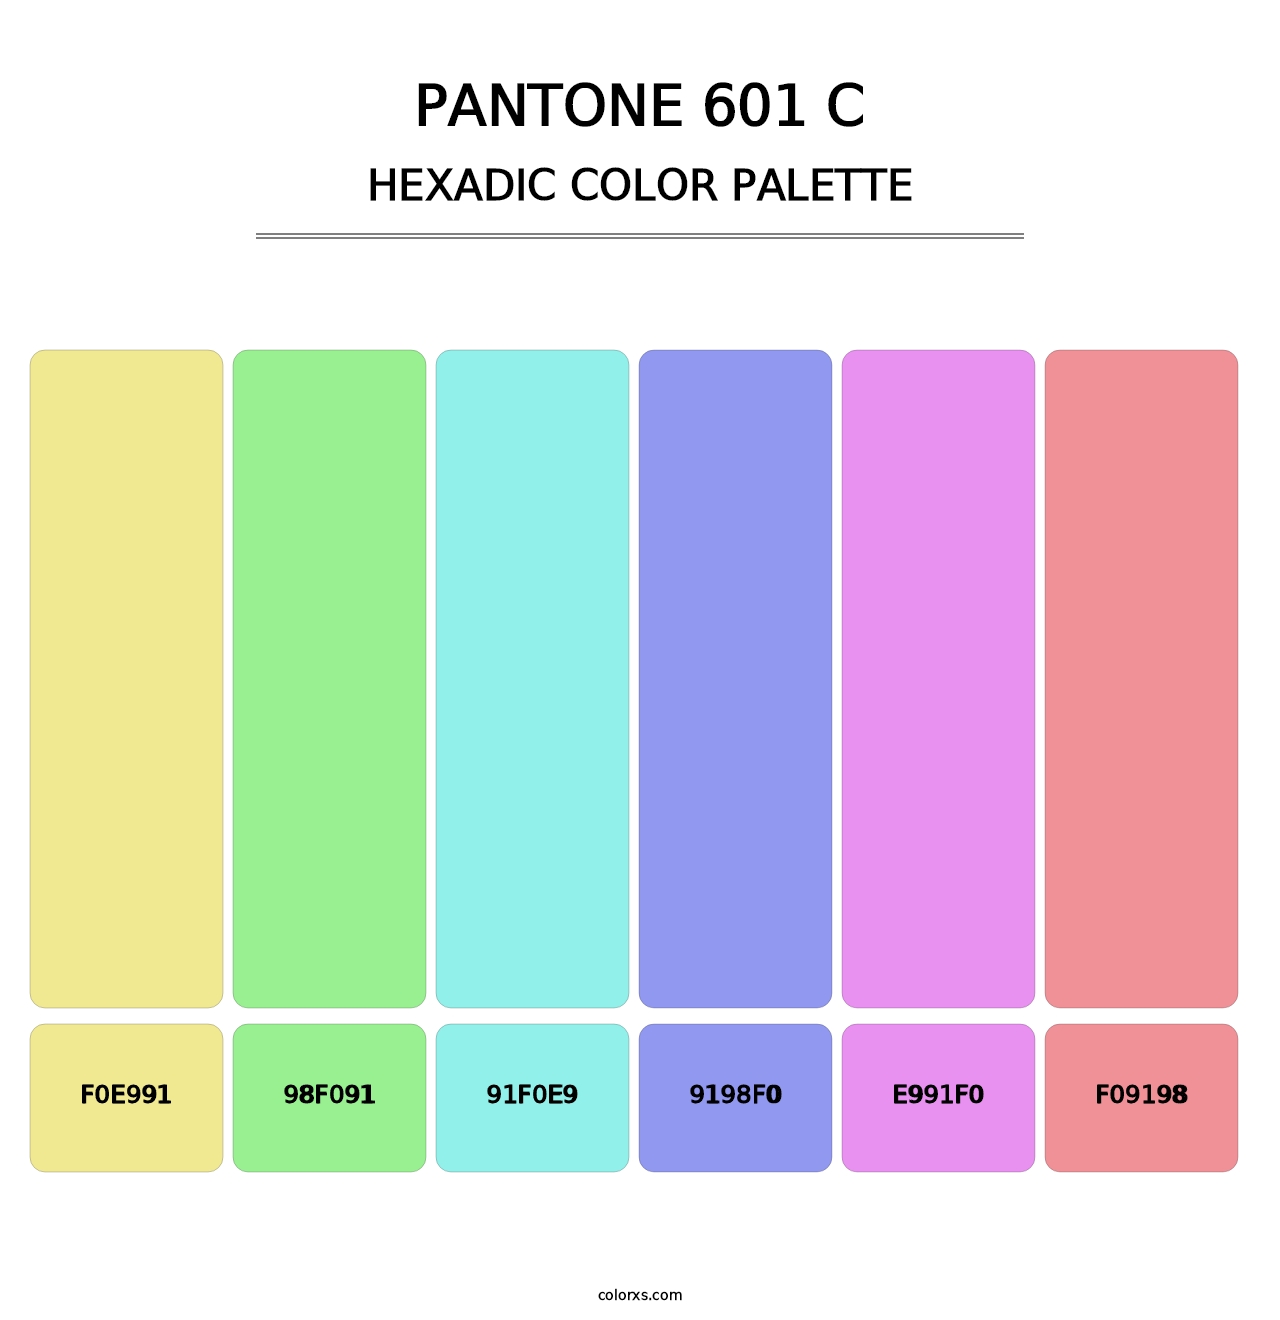 PANTONE 601 C - Hexadic Color Palette